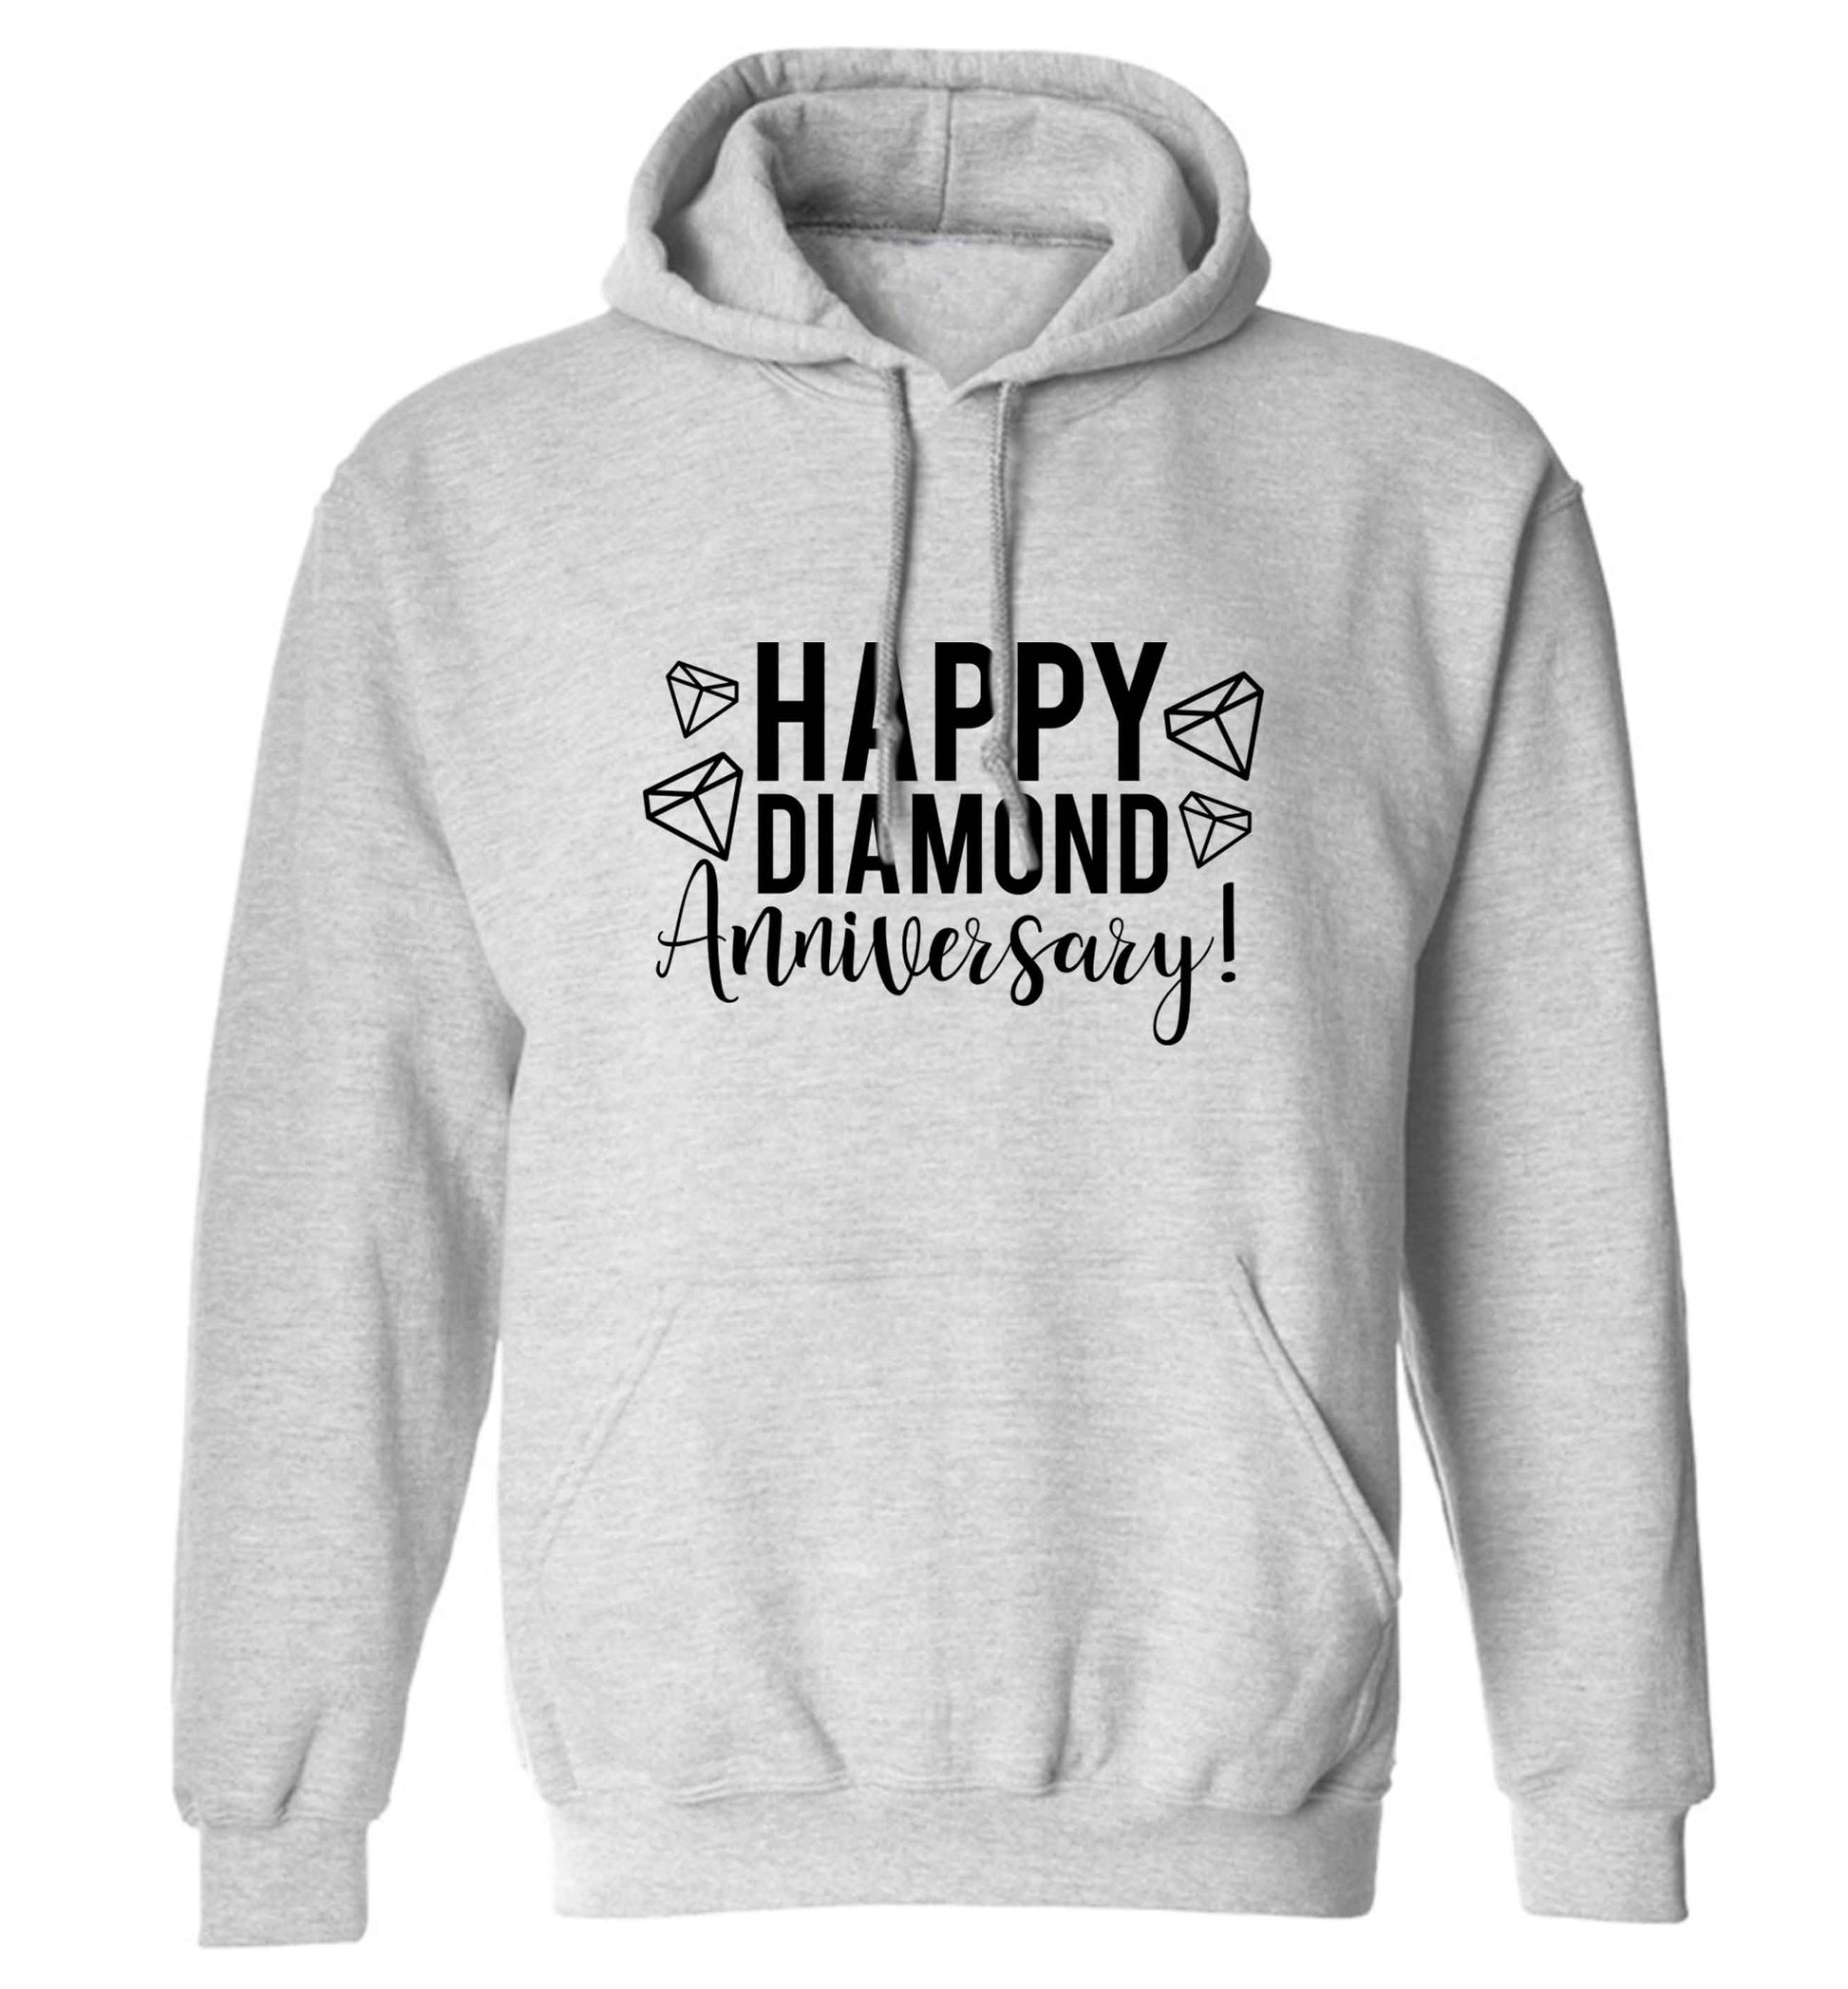 Happy diamond anniversary! adults unisex grey hoodie 2XL